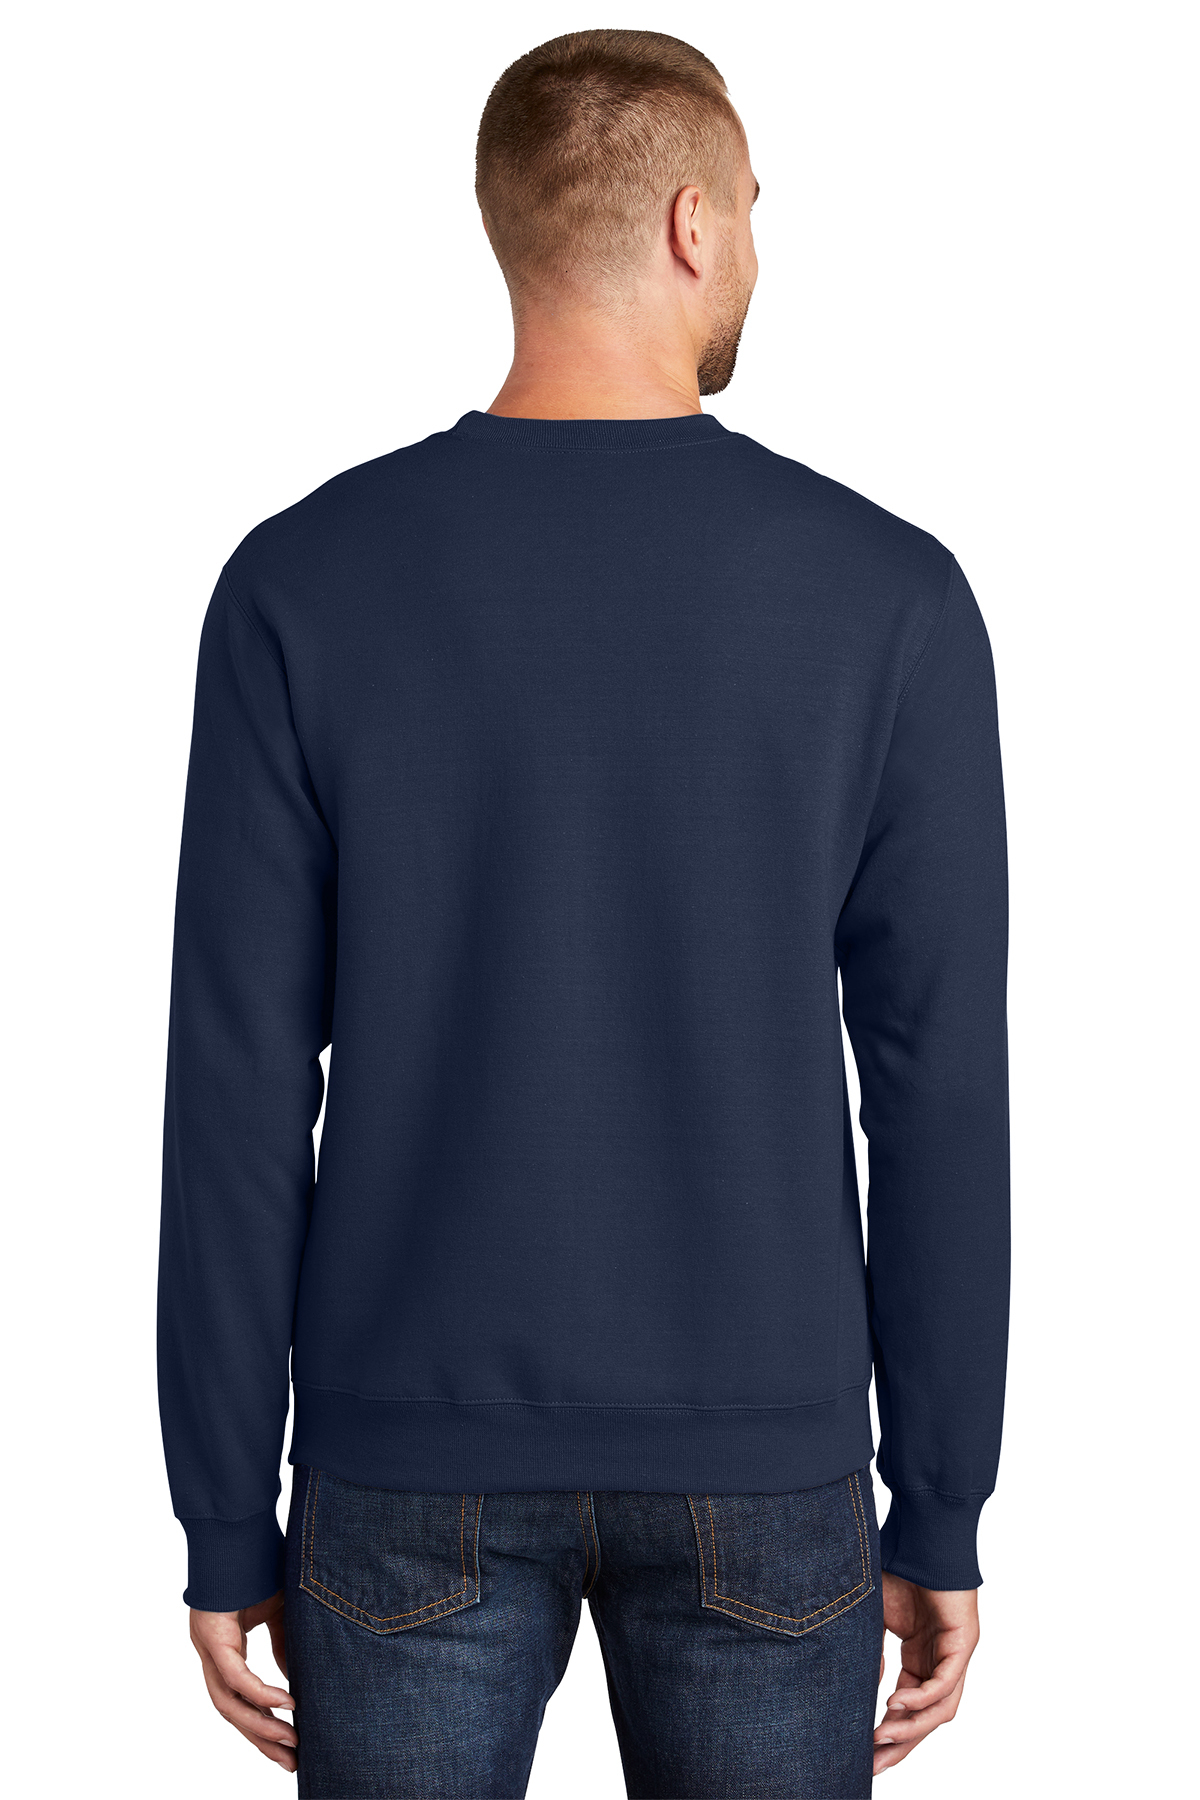 Port & Company Essential Fleece Crewneck Sweatshirt | Product | SanMar